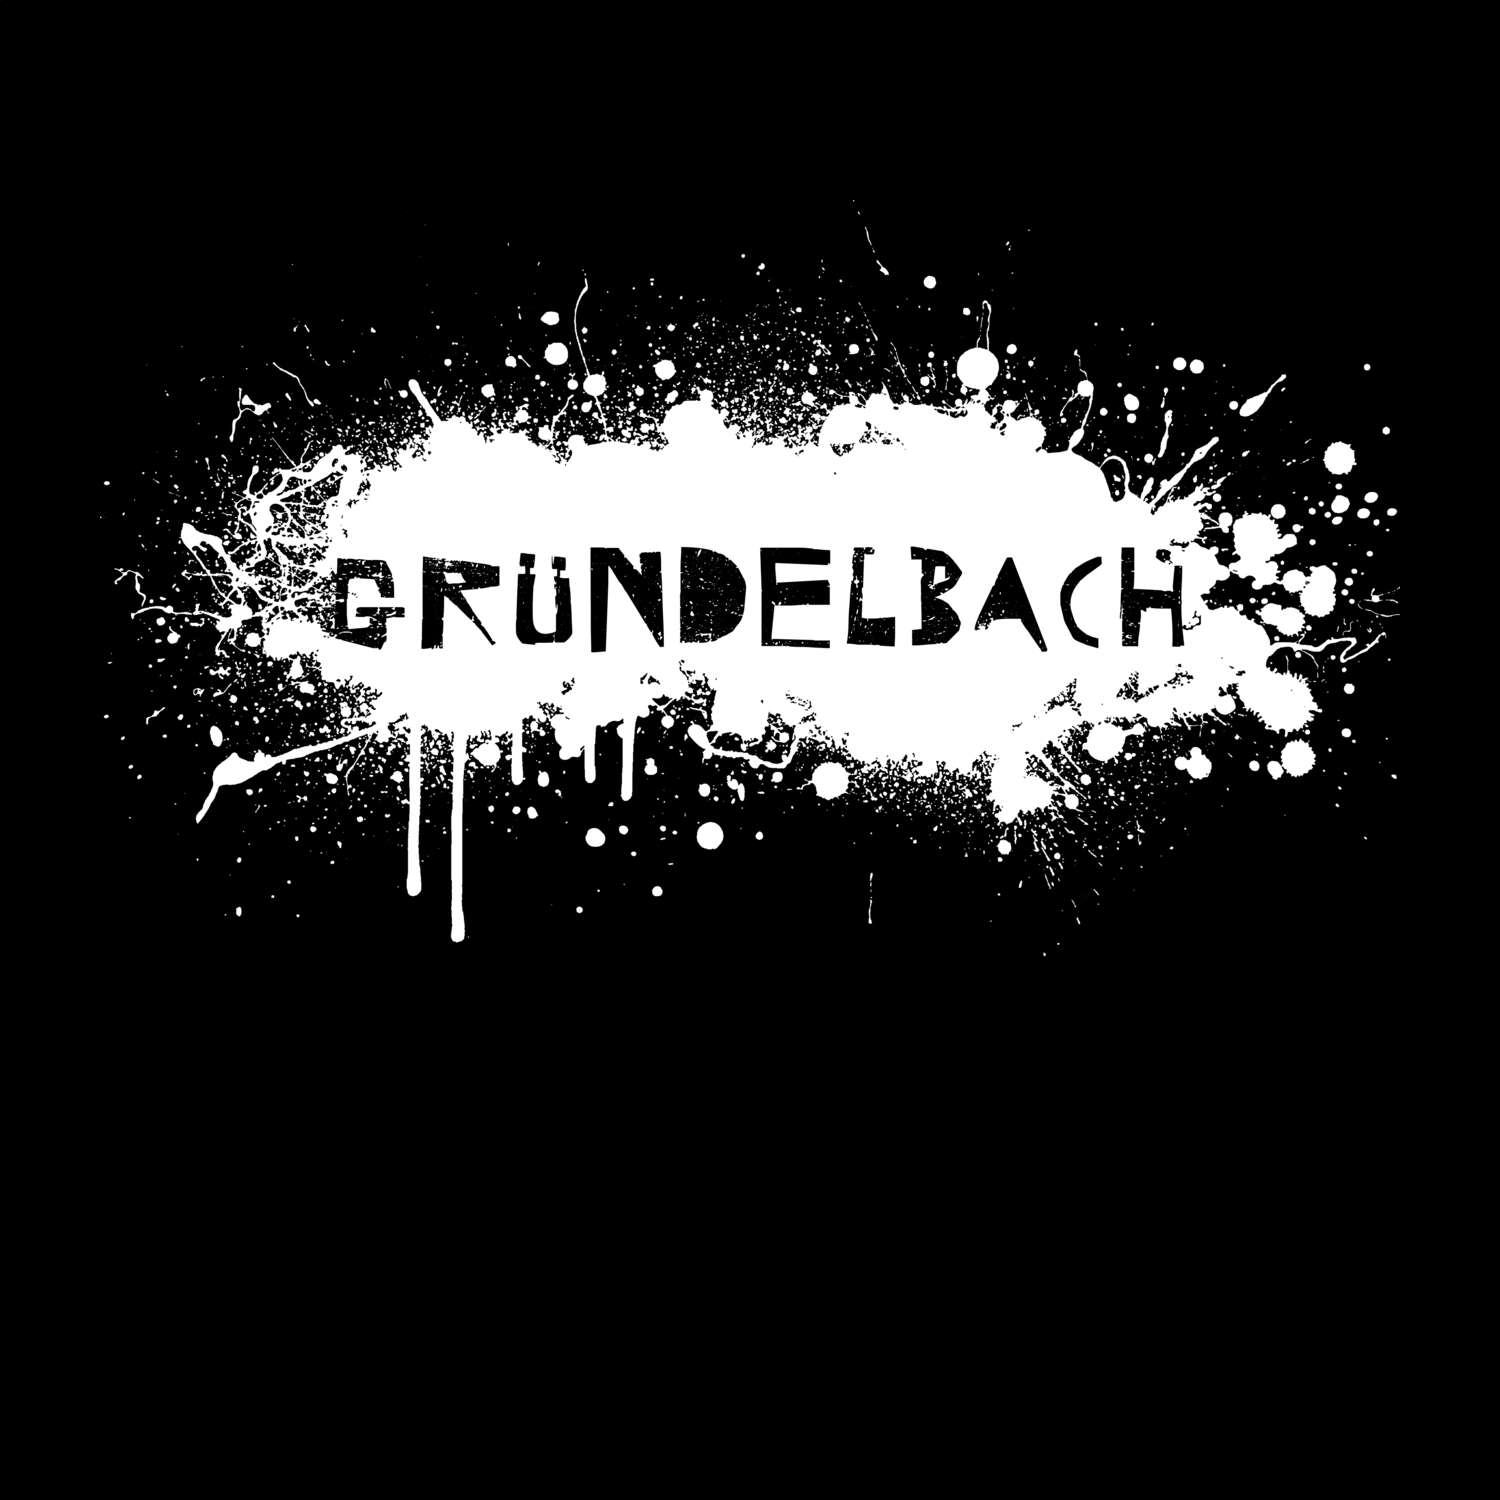 Gründelbach T-Shirt »Paint Splash Punk«